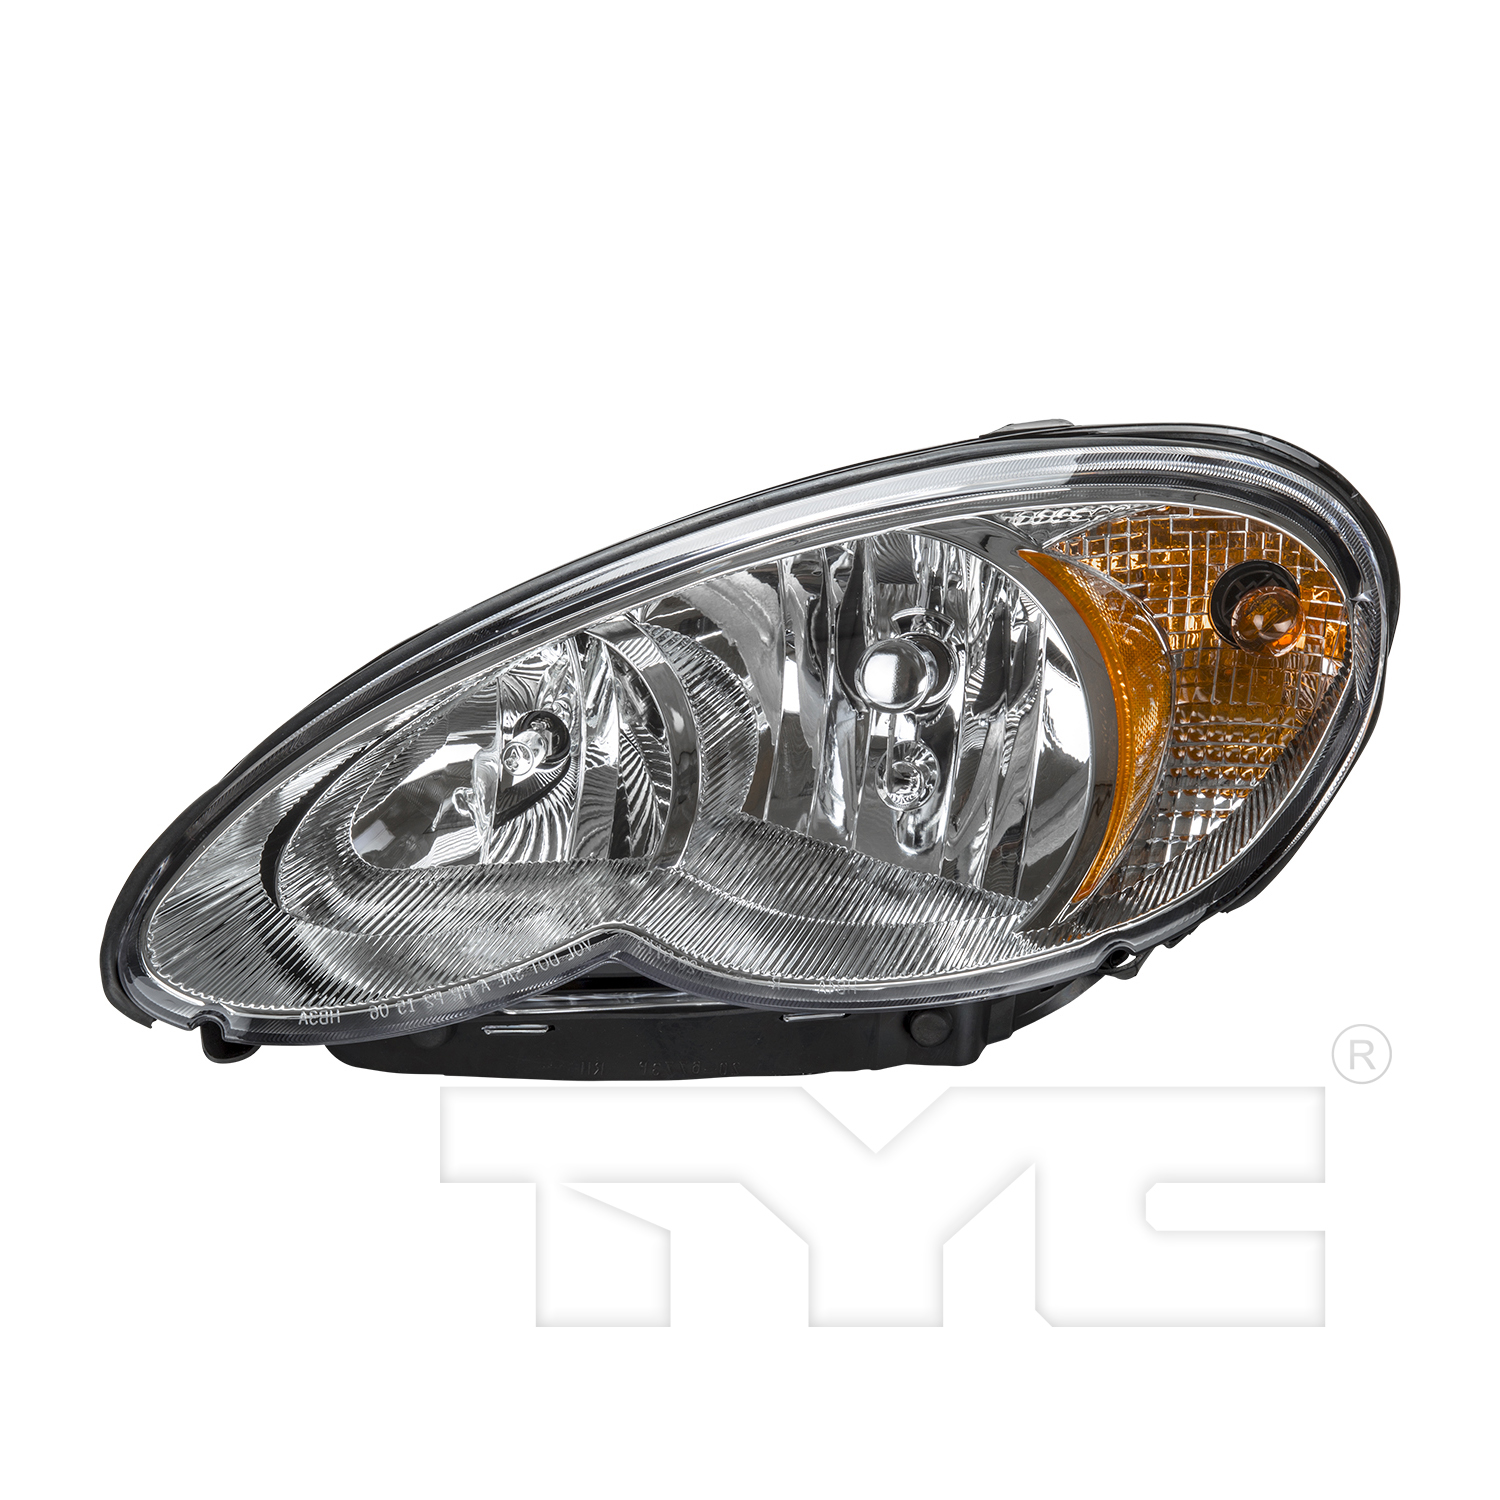 Aftermarket HEADLIGHTS for CHRYSLER - PT CRUISER, PT CRUISER,09-10,LT Headlamp assy composite